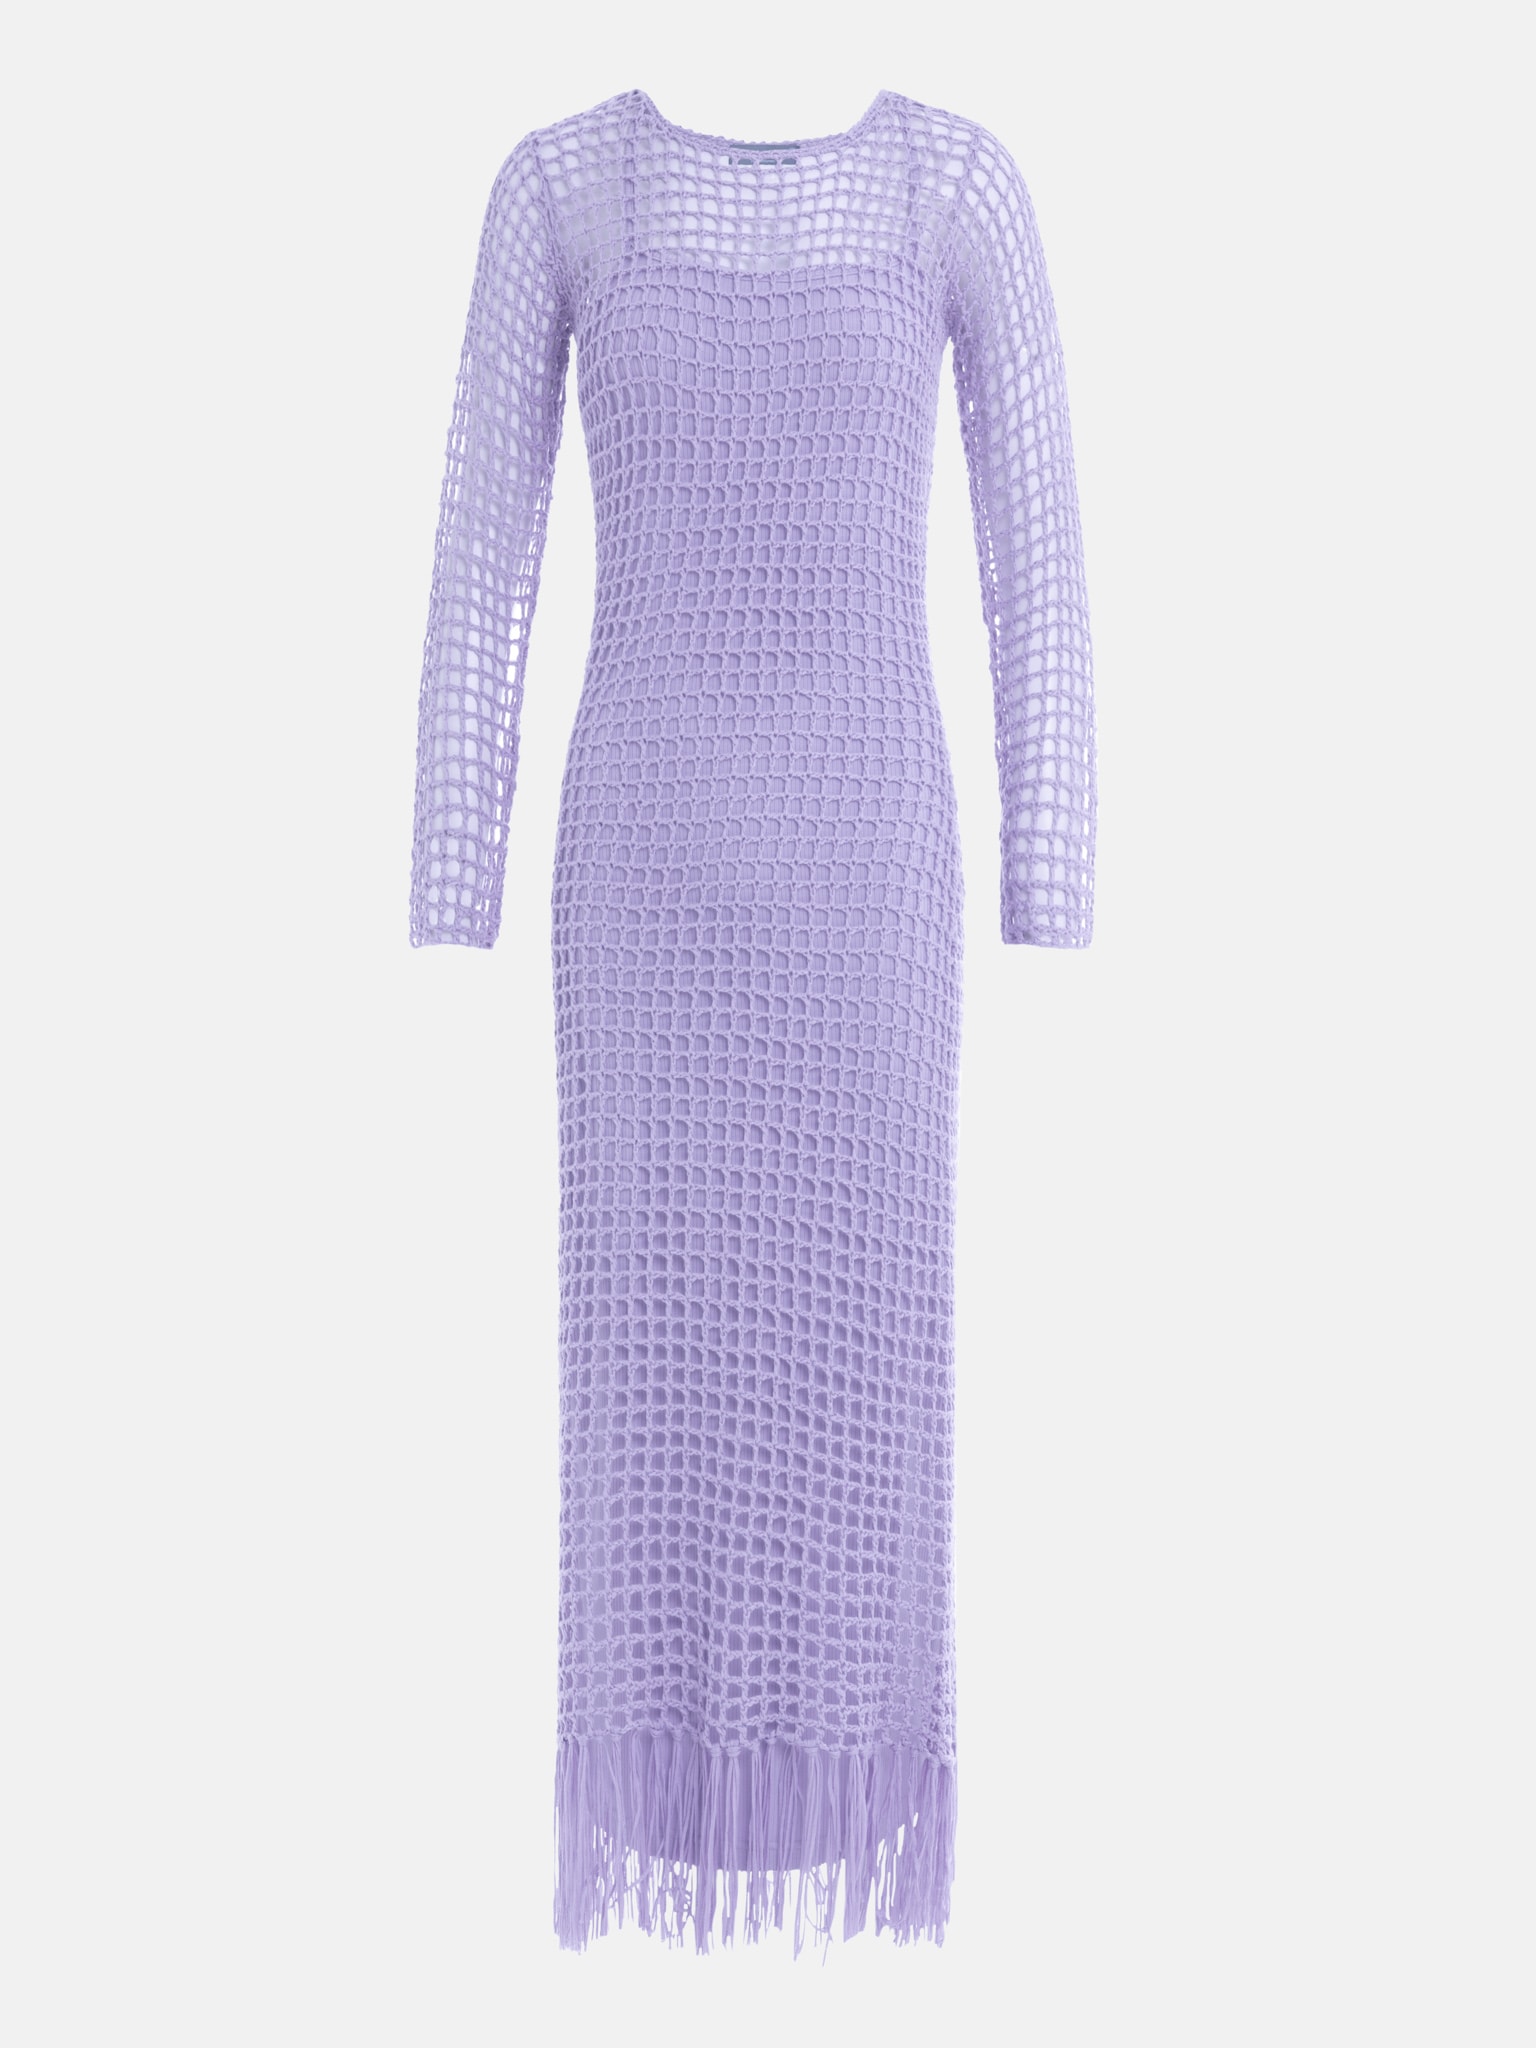 Mesh midi dress with fringed skirt :: LICHI - Online fashion store